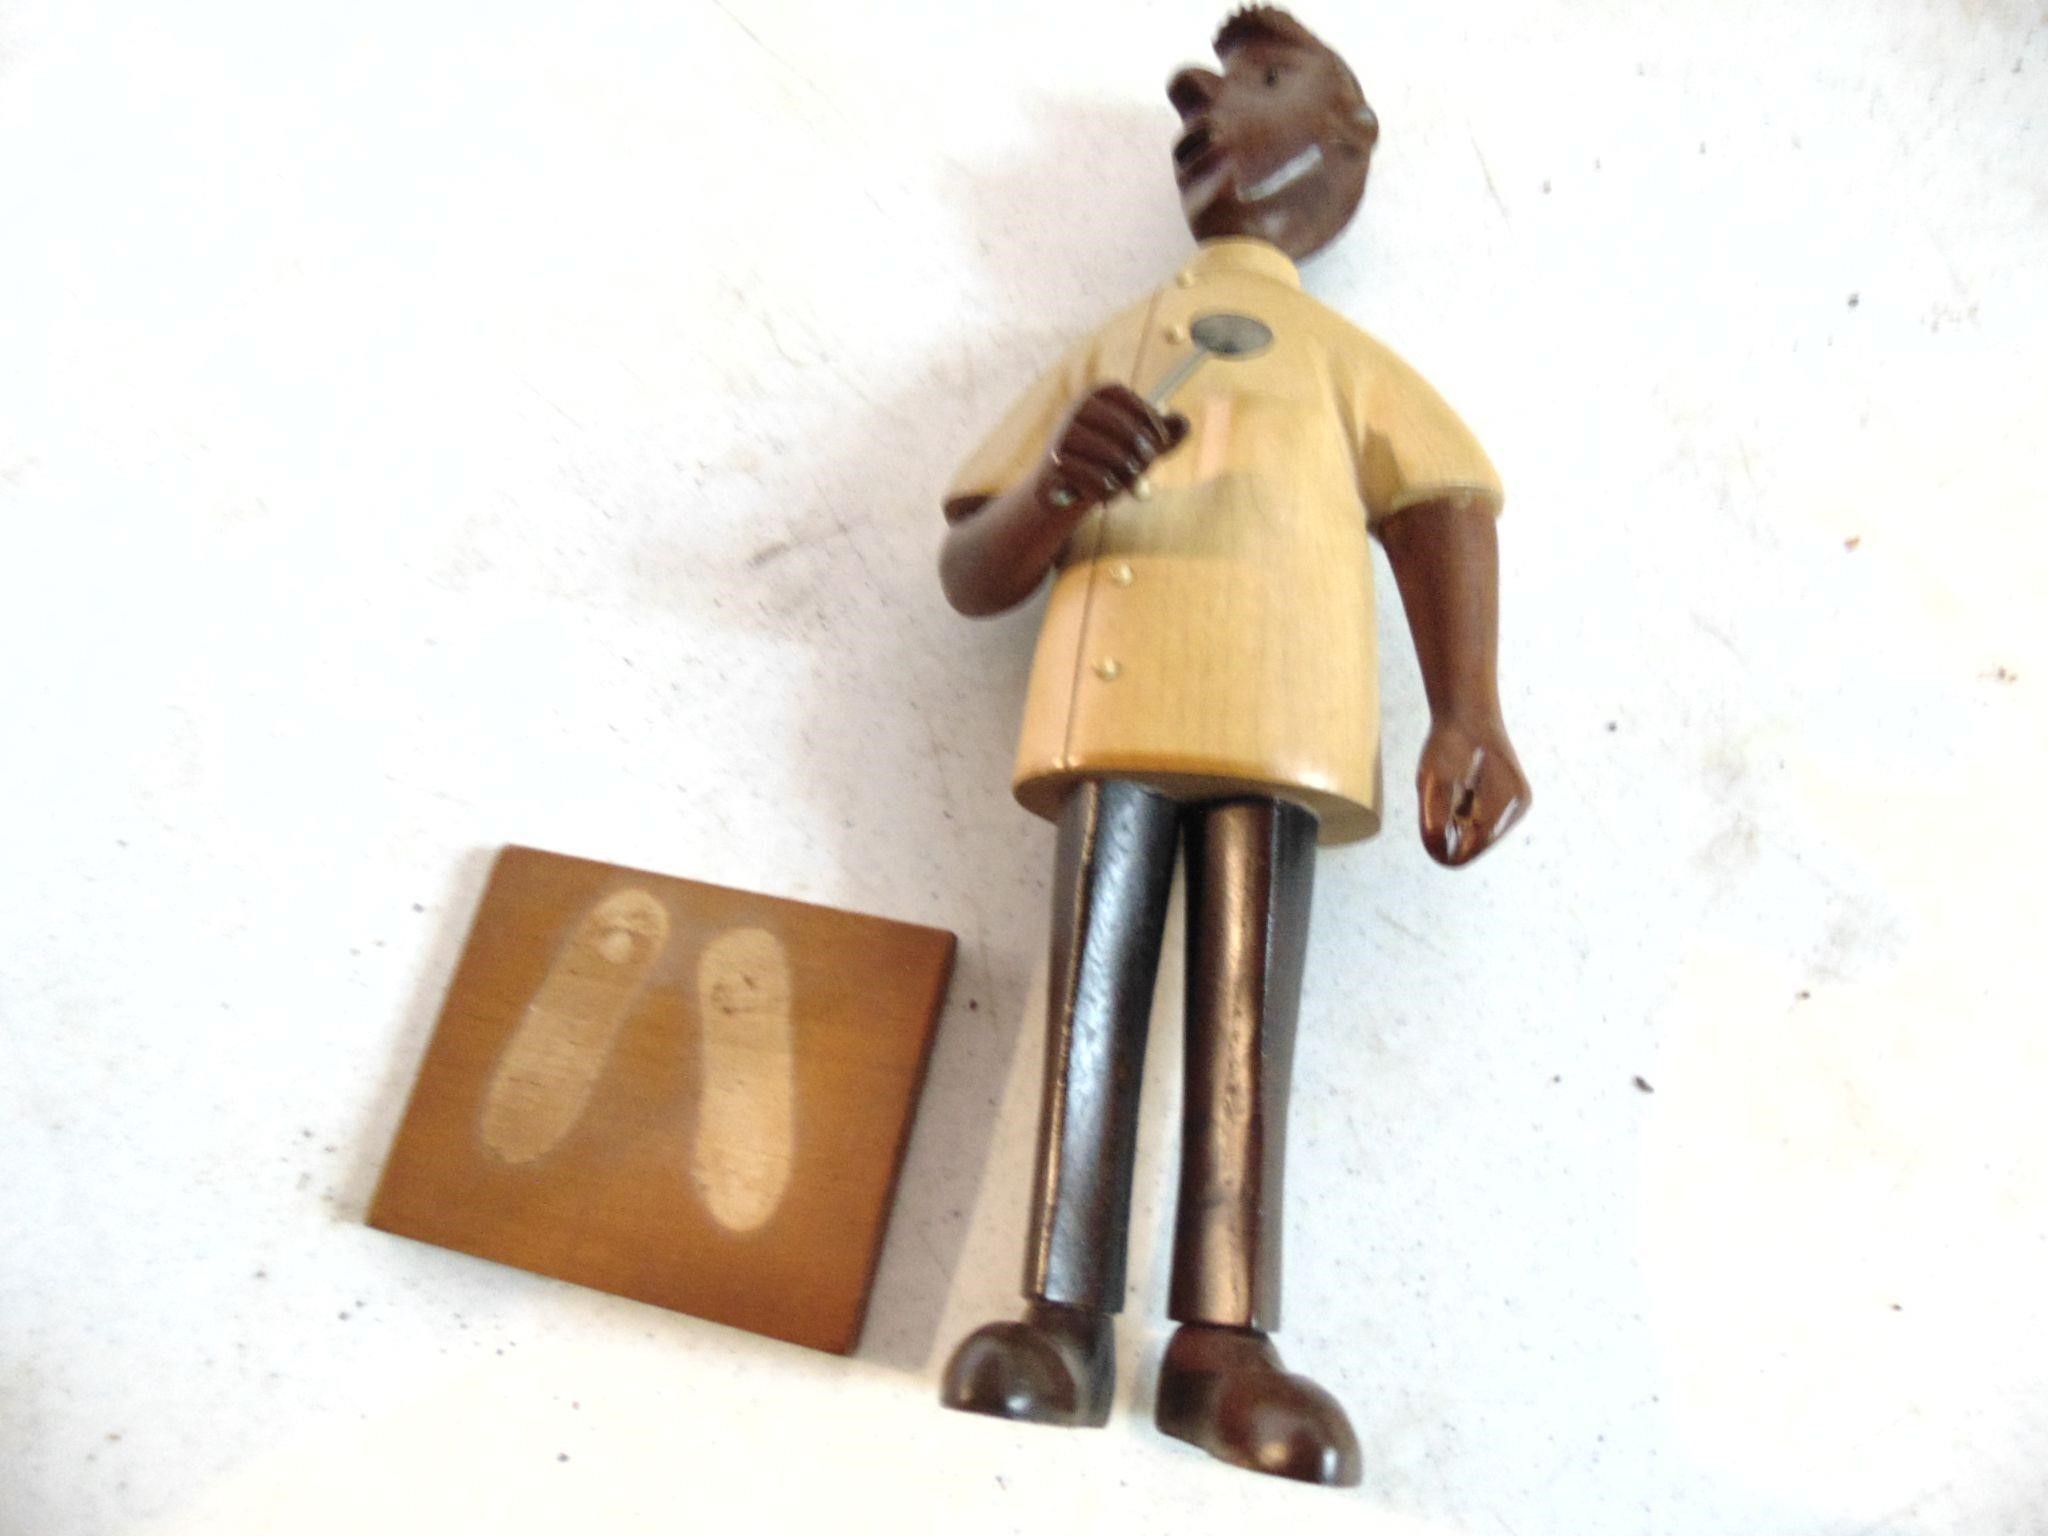 Wood Figurine of a Dentist - Wood Base needs glue